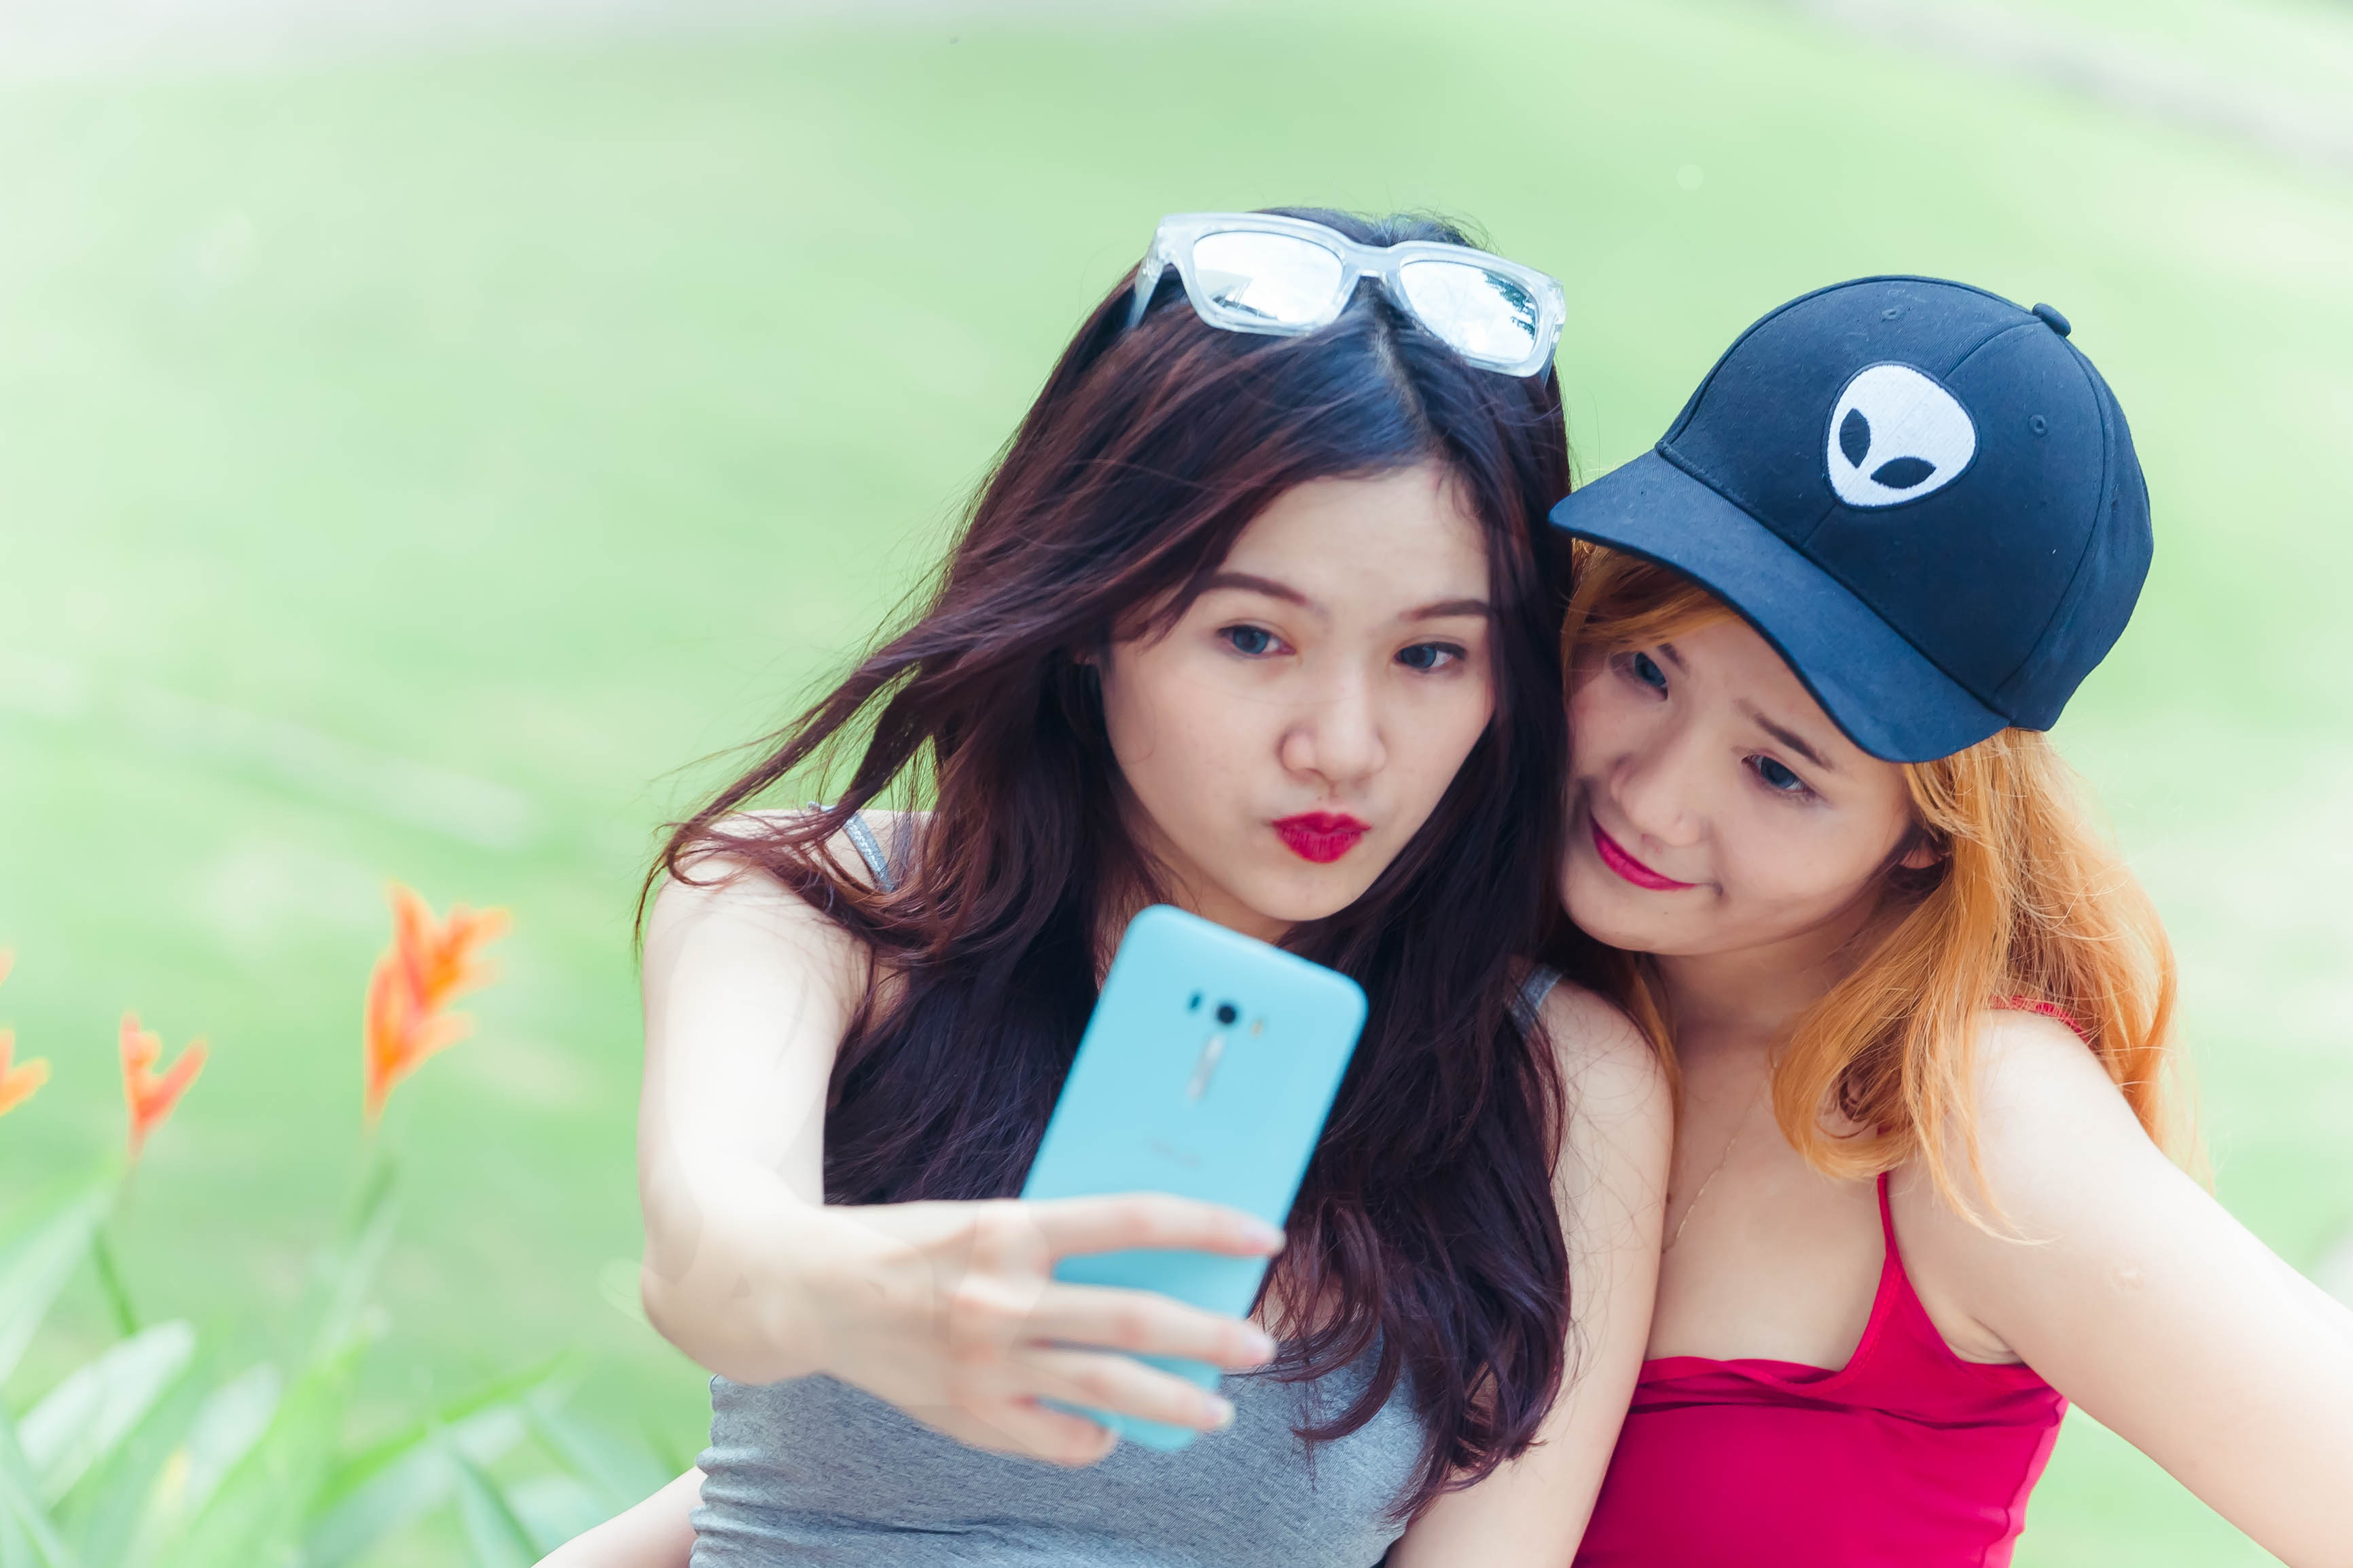 Zenfone Selfie Cùng Hai Bạn Nữ Xinh Xắn